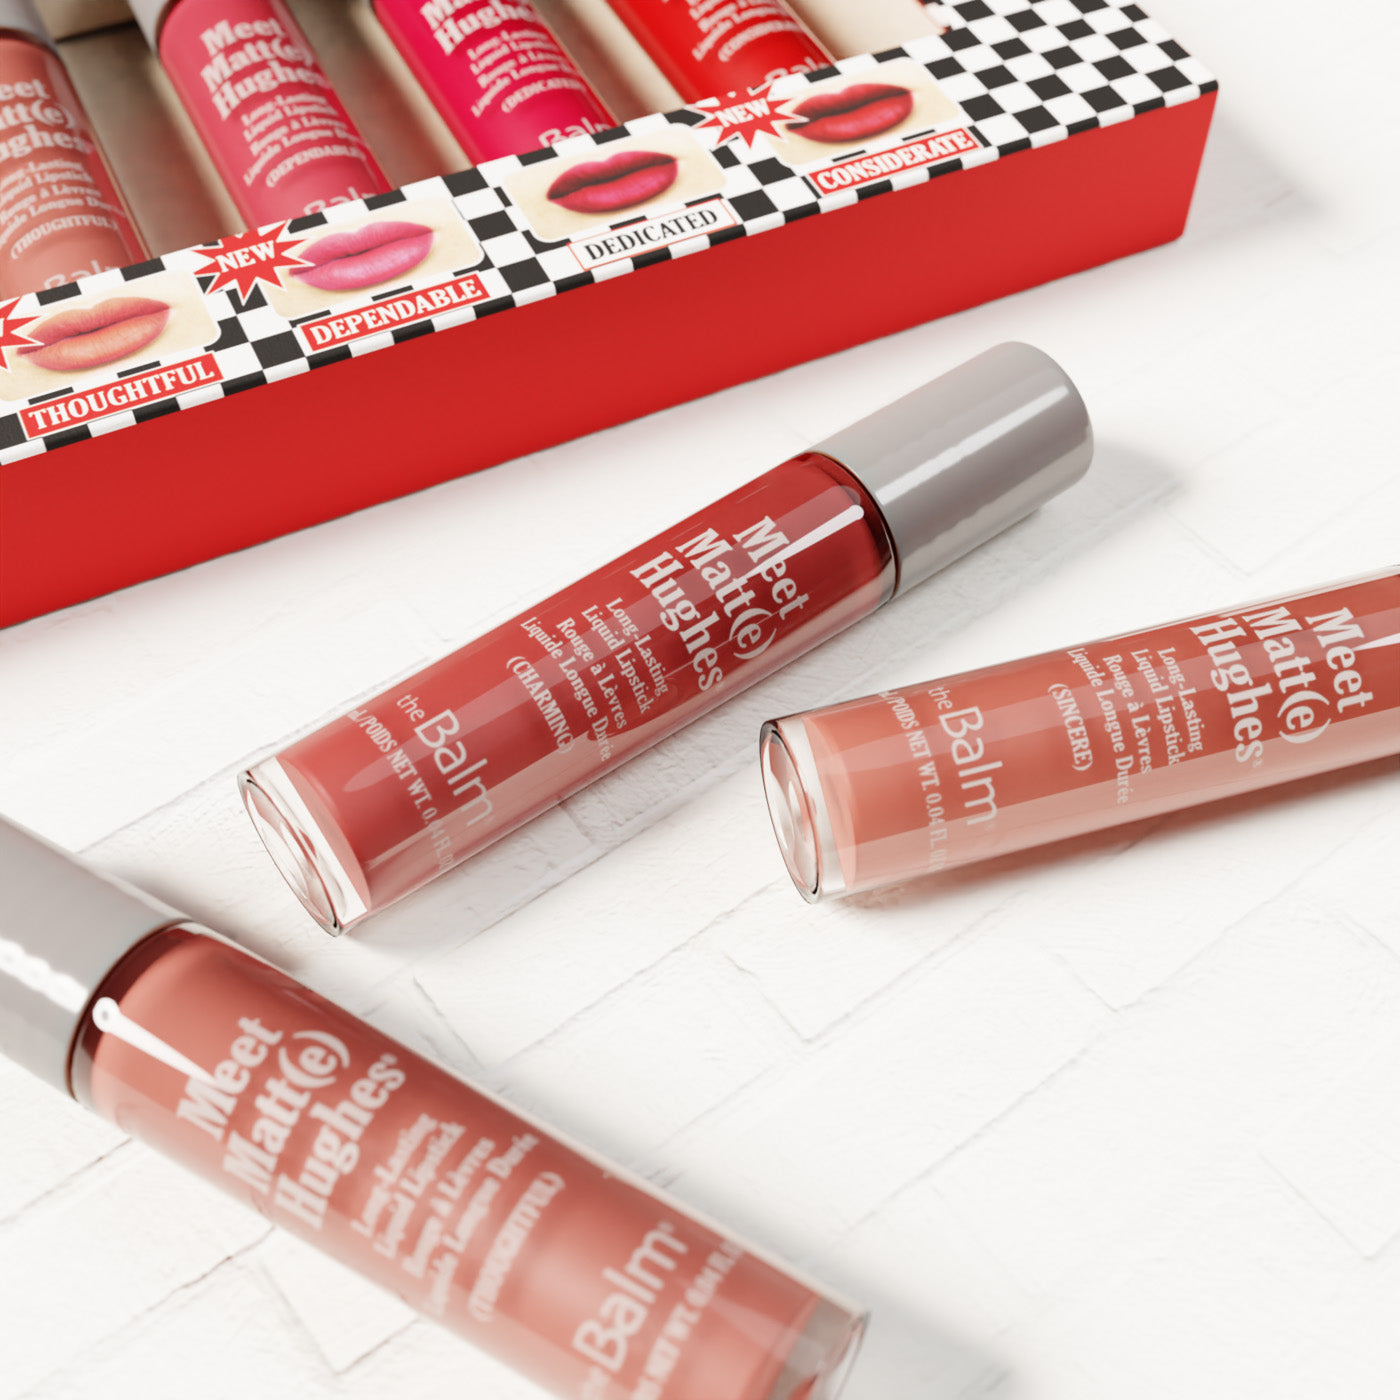 theBalm Meet Matt(e) Hughes Volume 14 Set of 6 Mini Long-Lasting Liquid Lipsticks with 3 New Shades